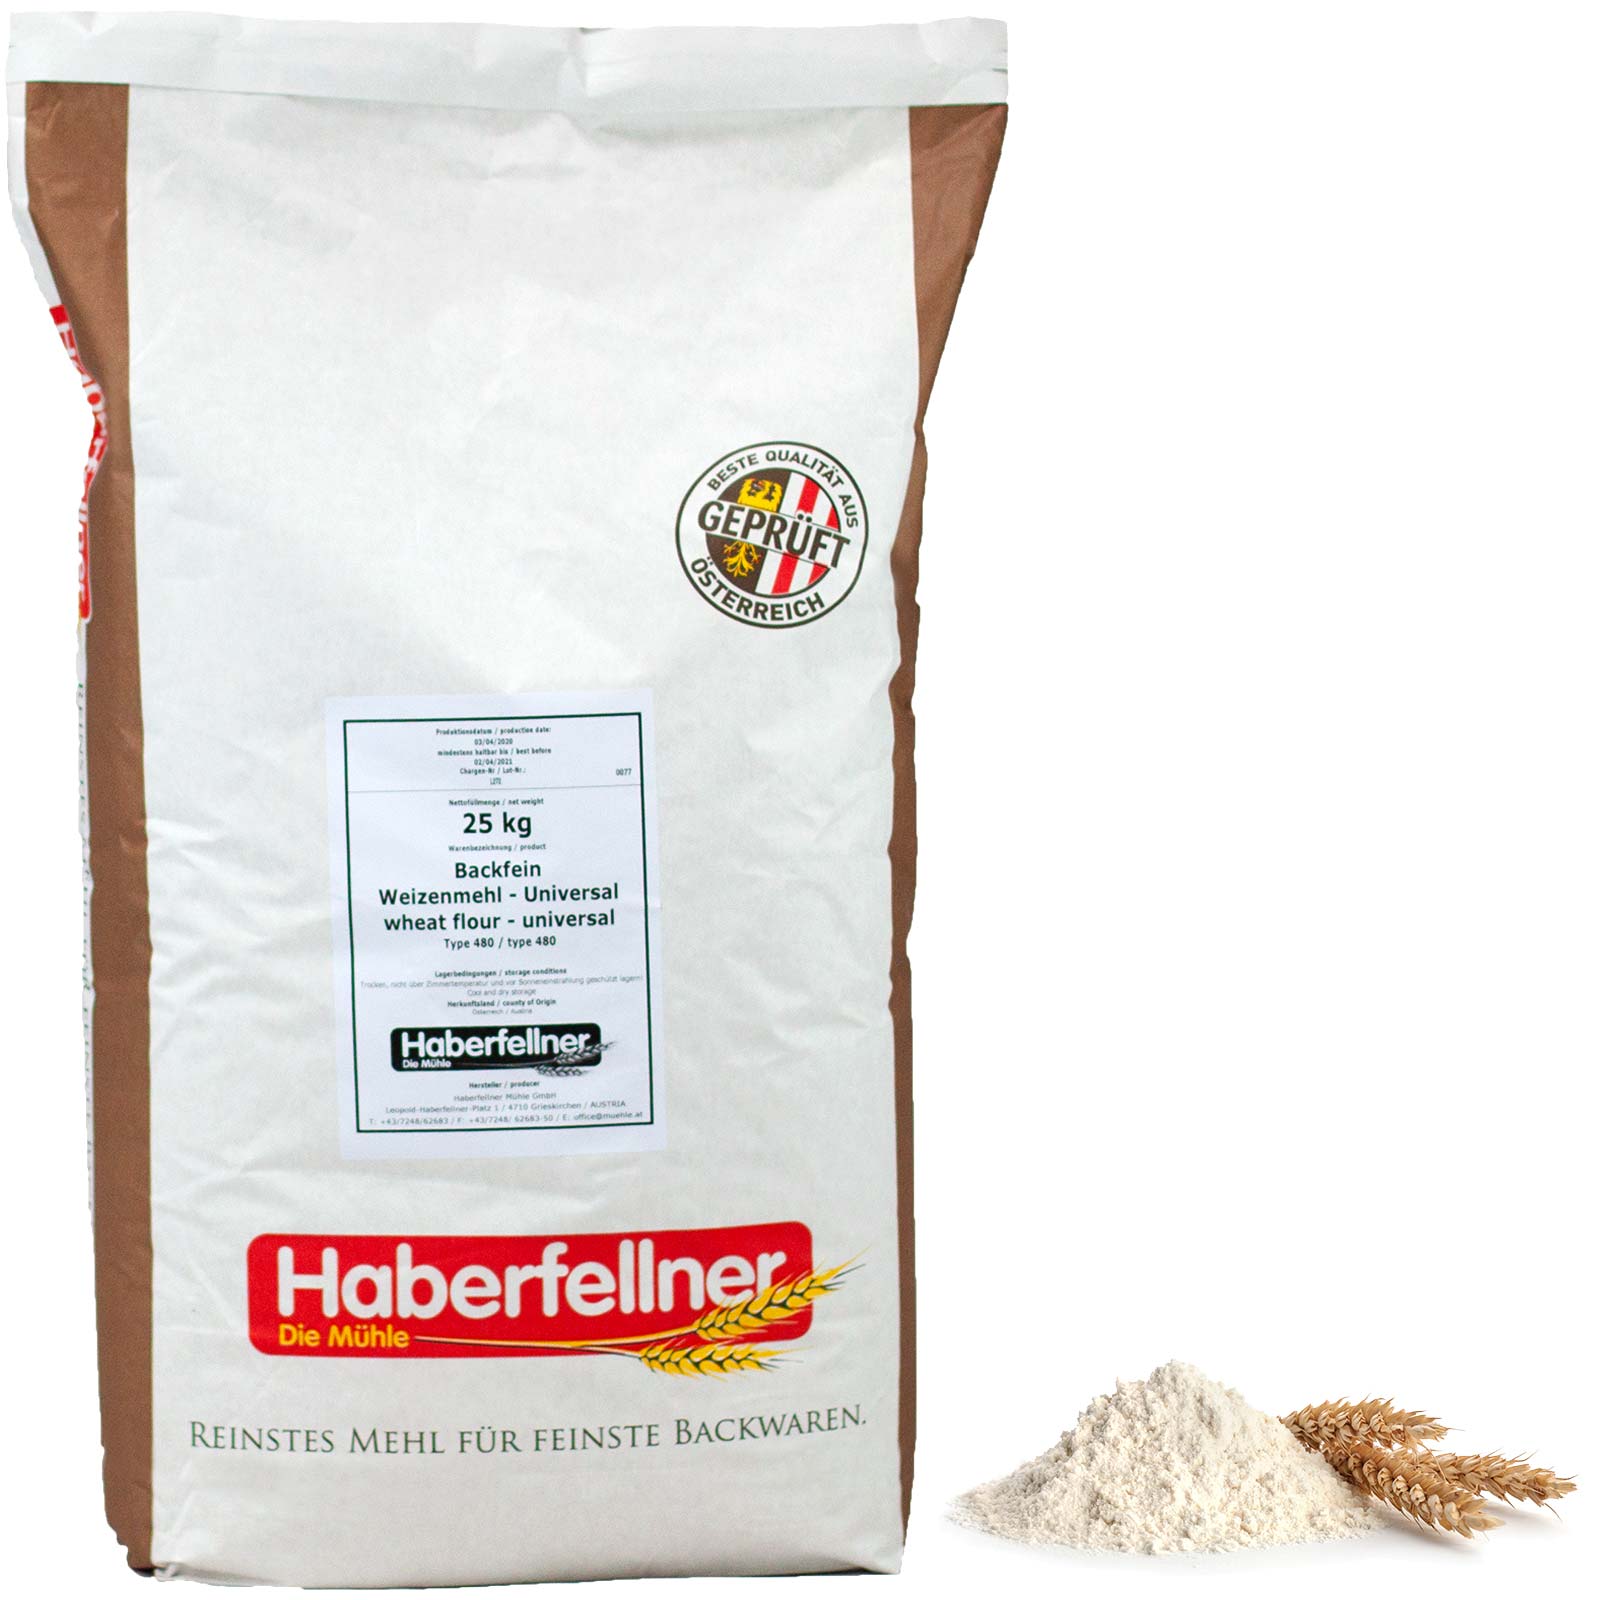 Farine de blé universelle Haberfellner type 00 (FR 45 / AT W480)